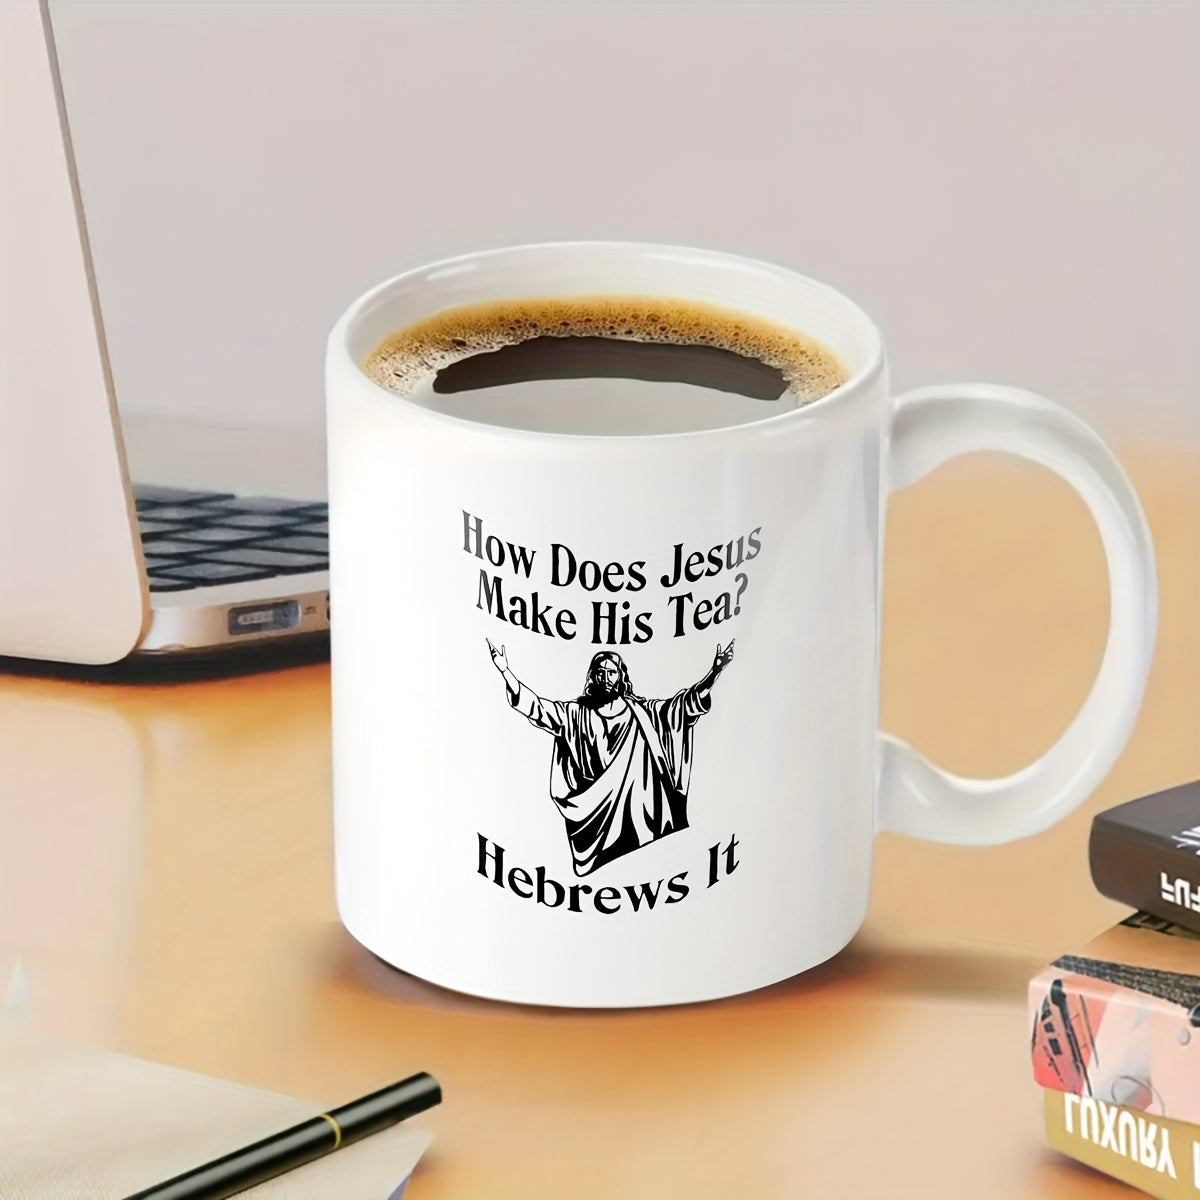 How Does Jesus Make His Tea? HEBREWS It Funny Christian White Ceramic Mug claimedbygoddesigns